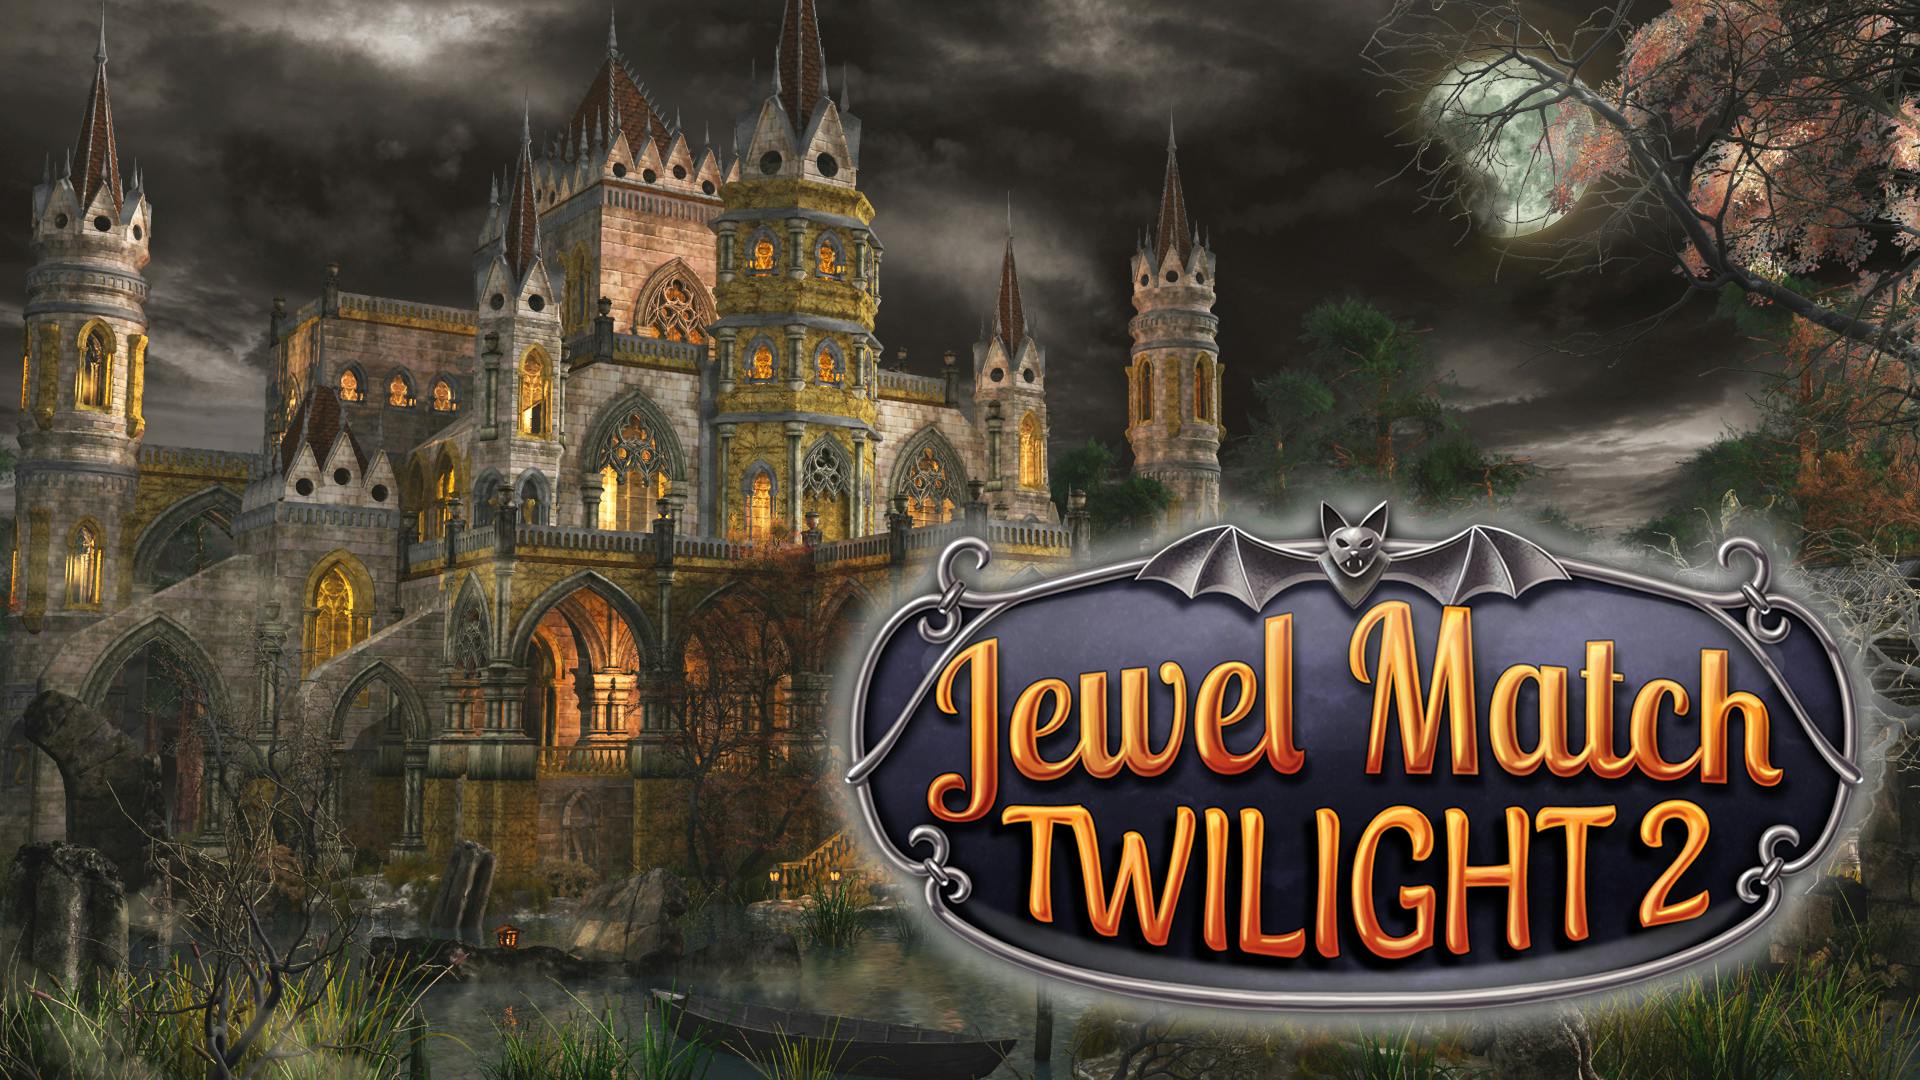 jewel-match-twilight-2-pc-steam-game-fanatical